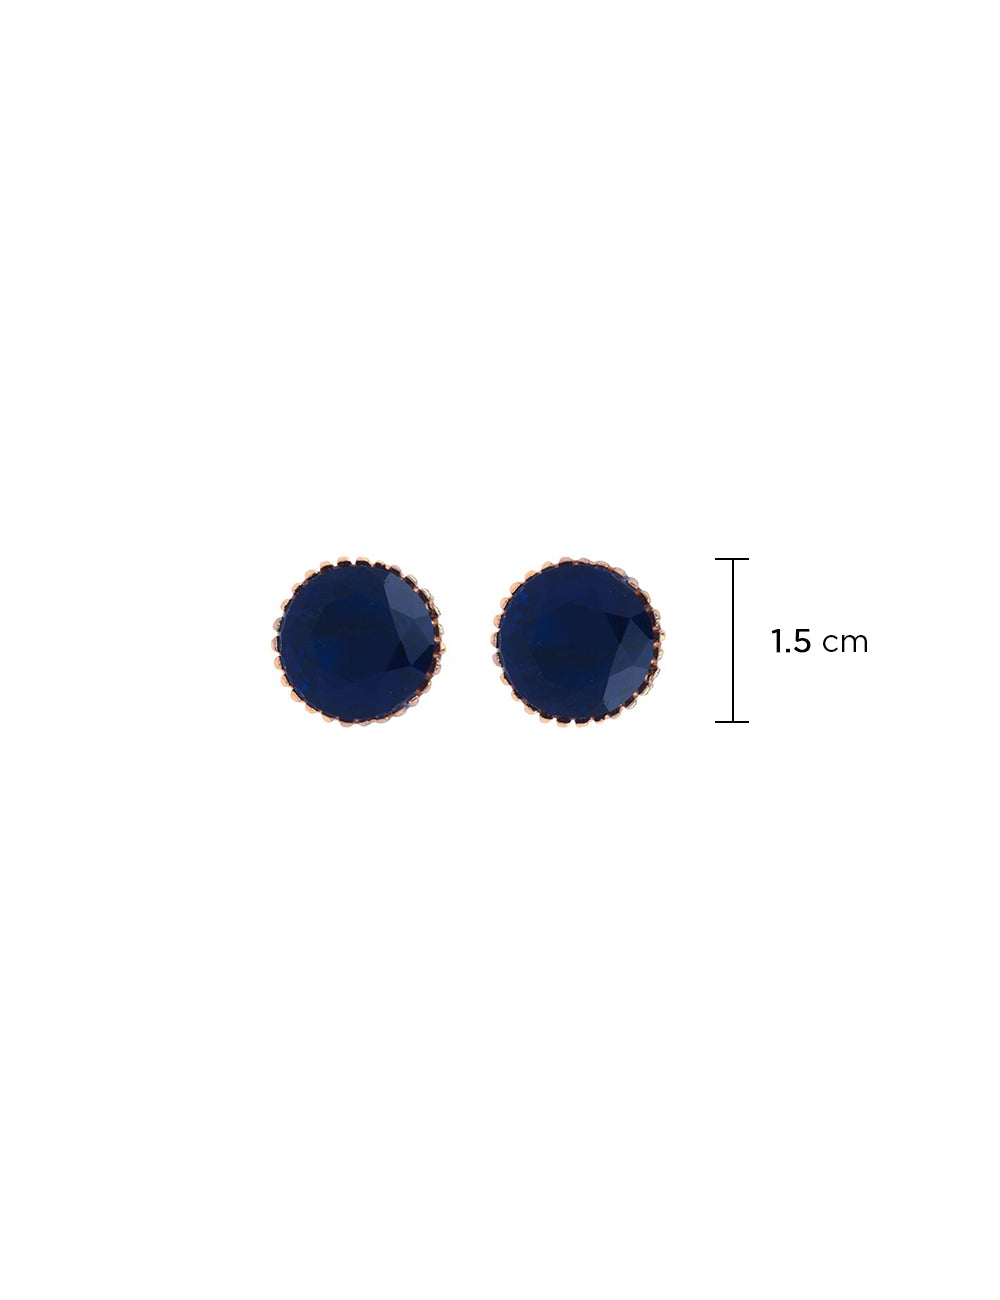 Blue Sapphire Studs (Semi Precious Sapphire) | Handmade | 24K Gold Plated | Made in India